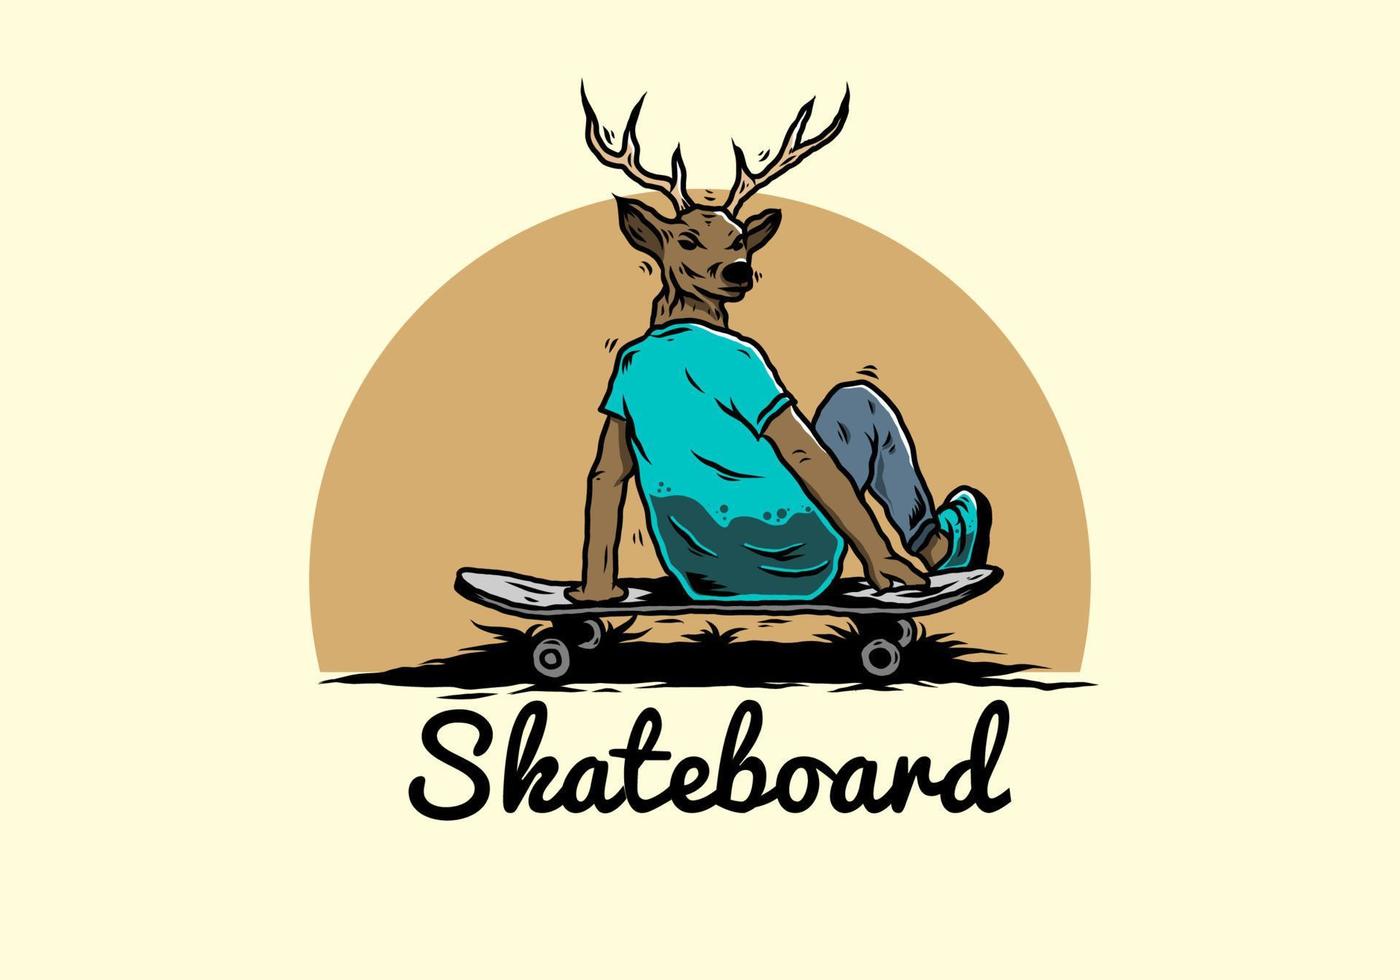 Man with deer head sitting on skateboard illustration vector